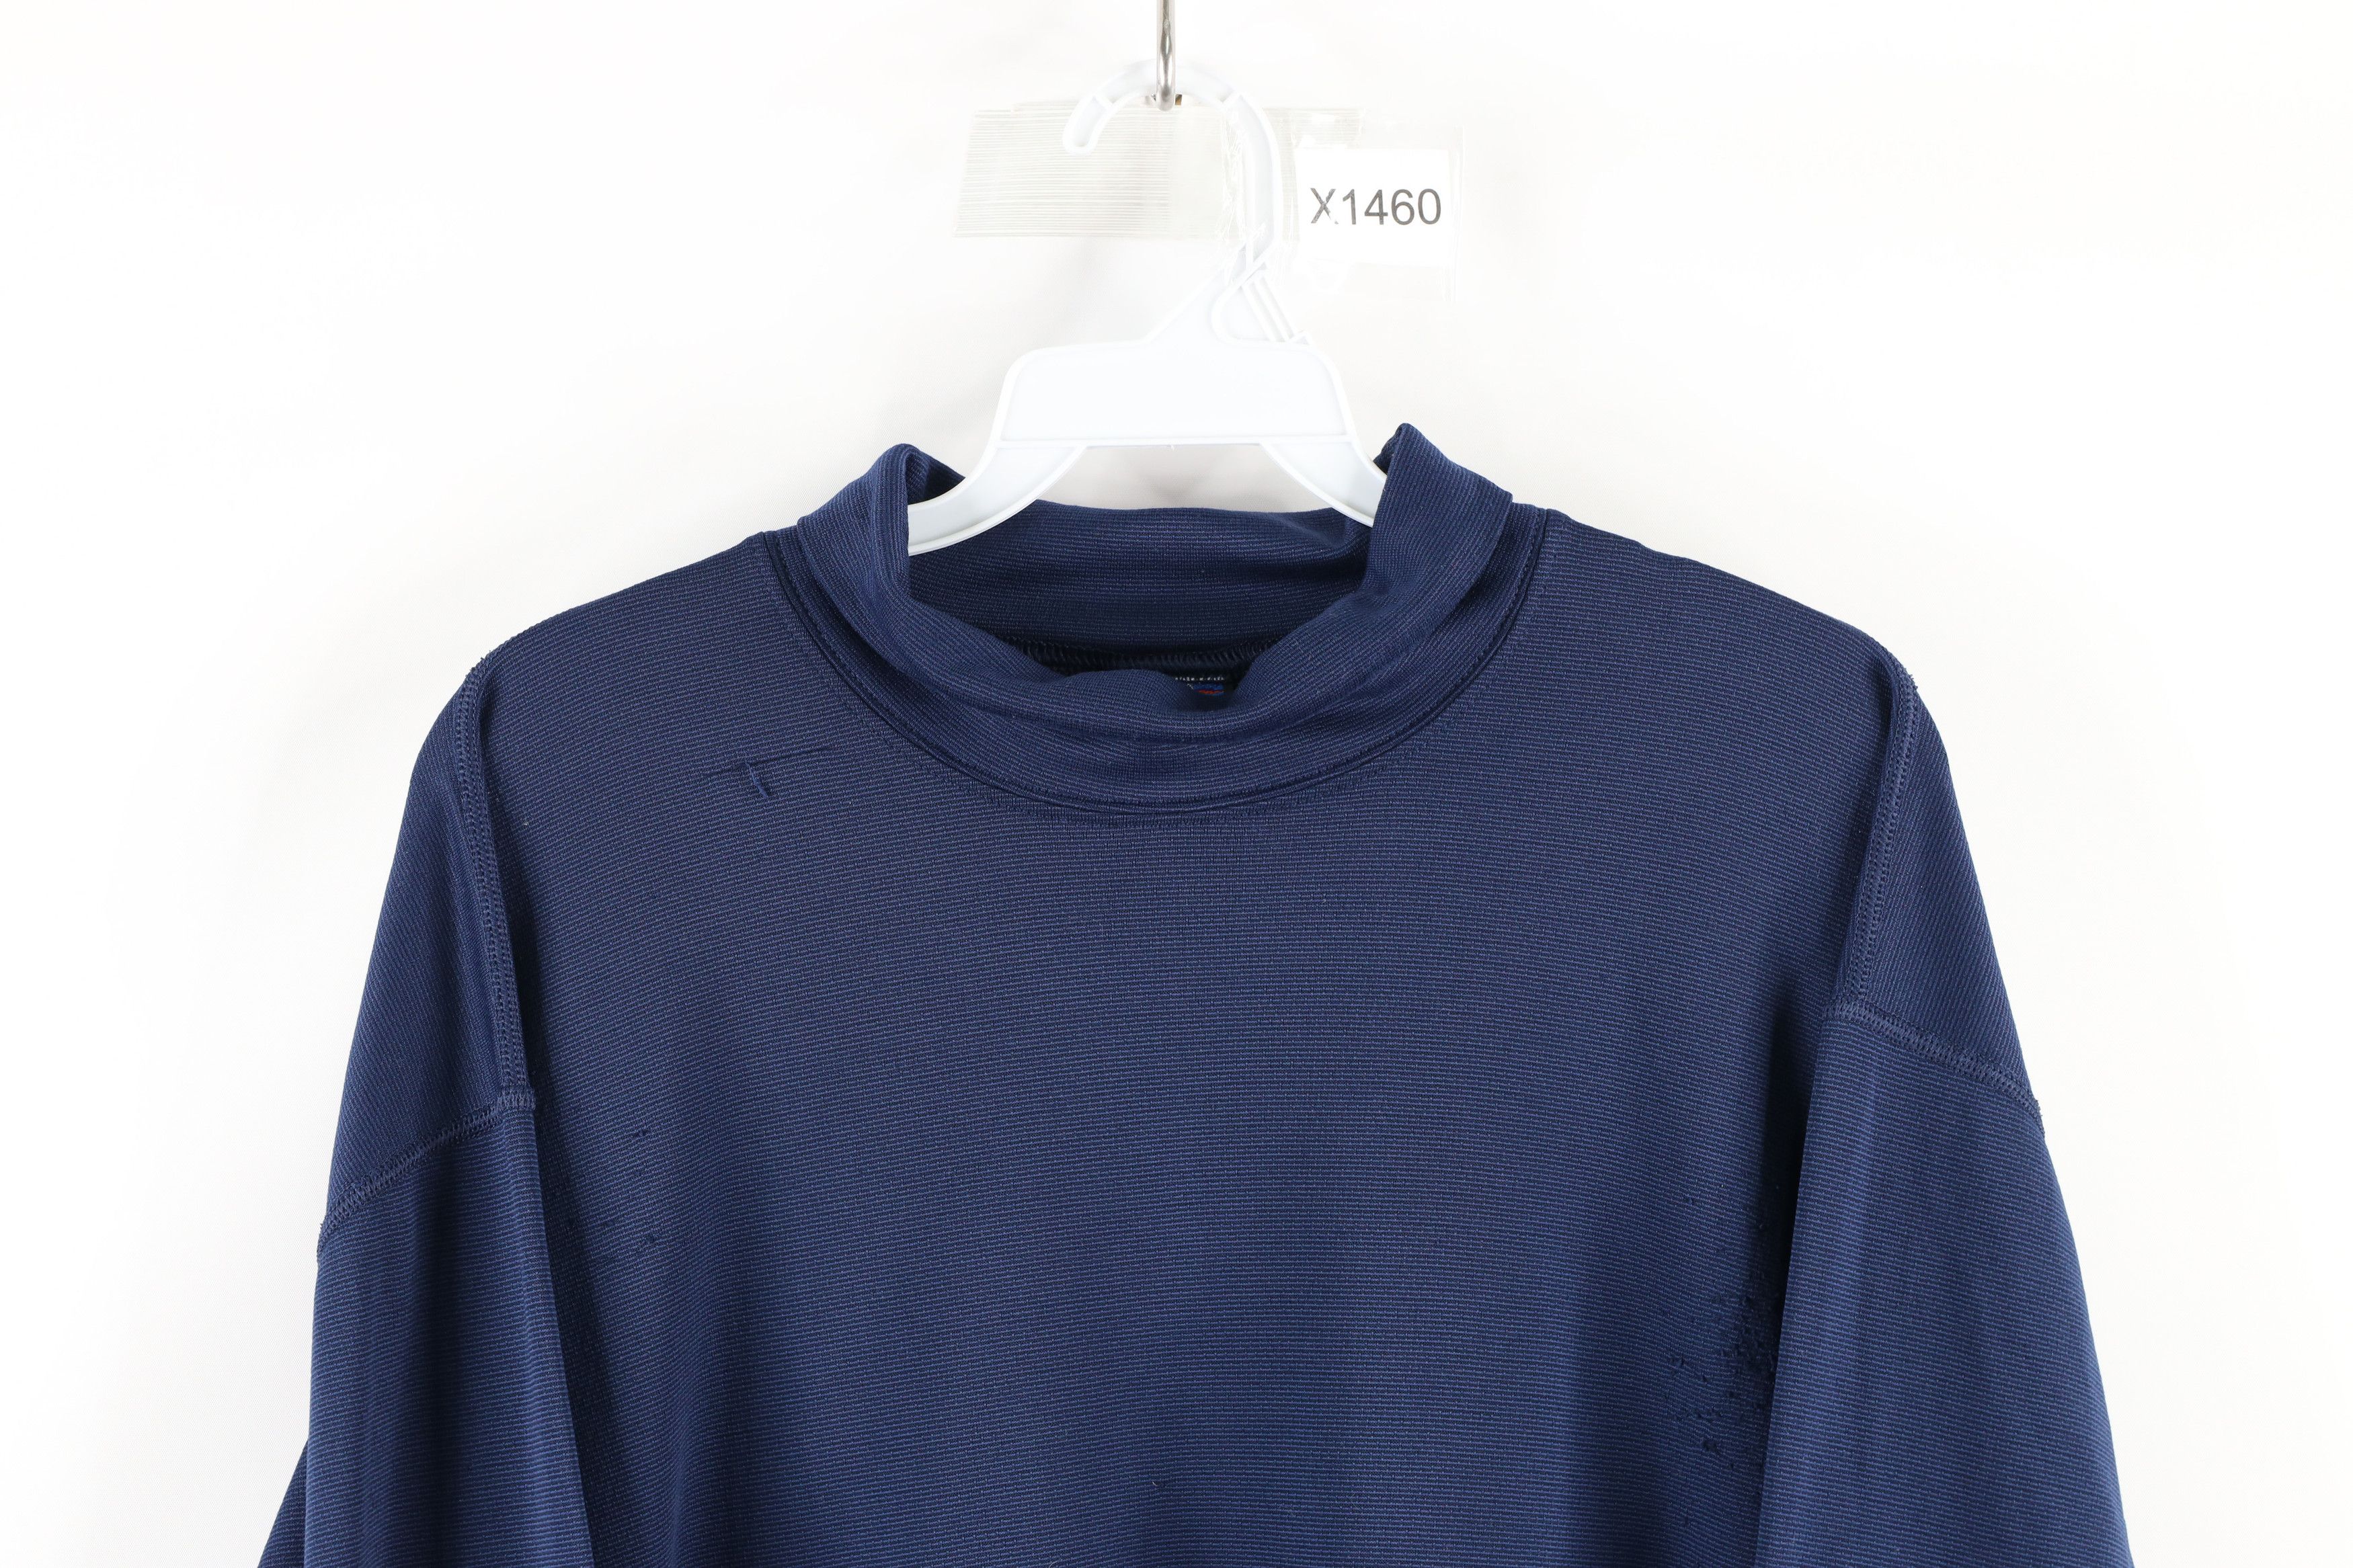 Vintage Vintage 90s Patagonia Capilene Mock Neck Long Sleeve Shir Size US XL / EU 56 / 4 - 2 Preview